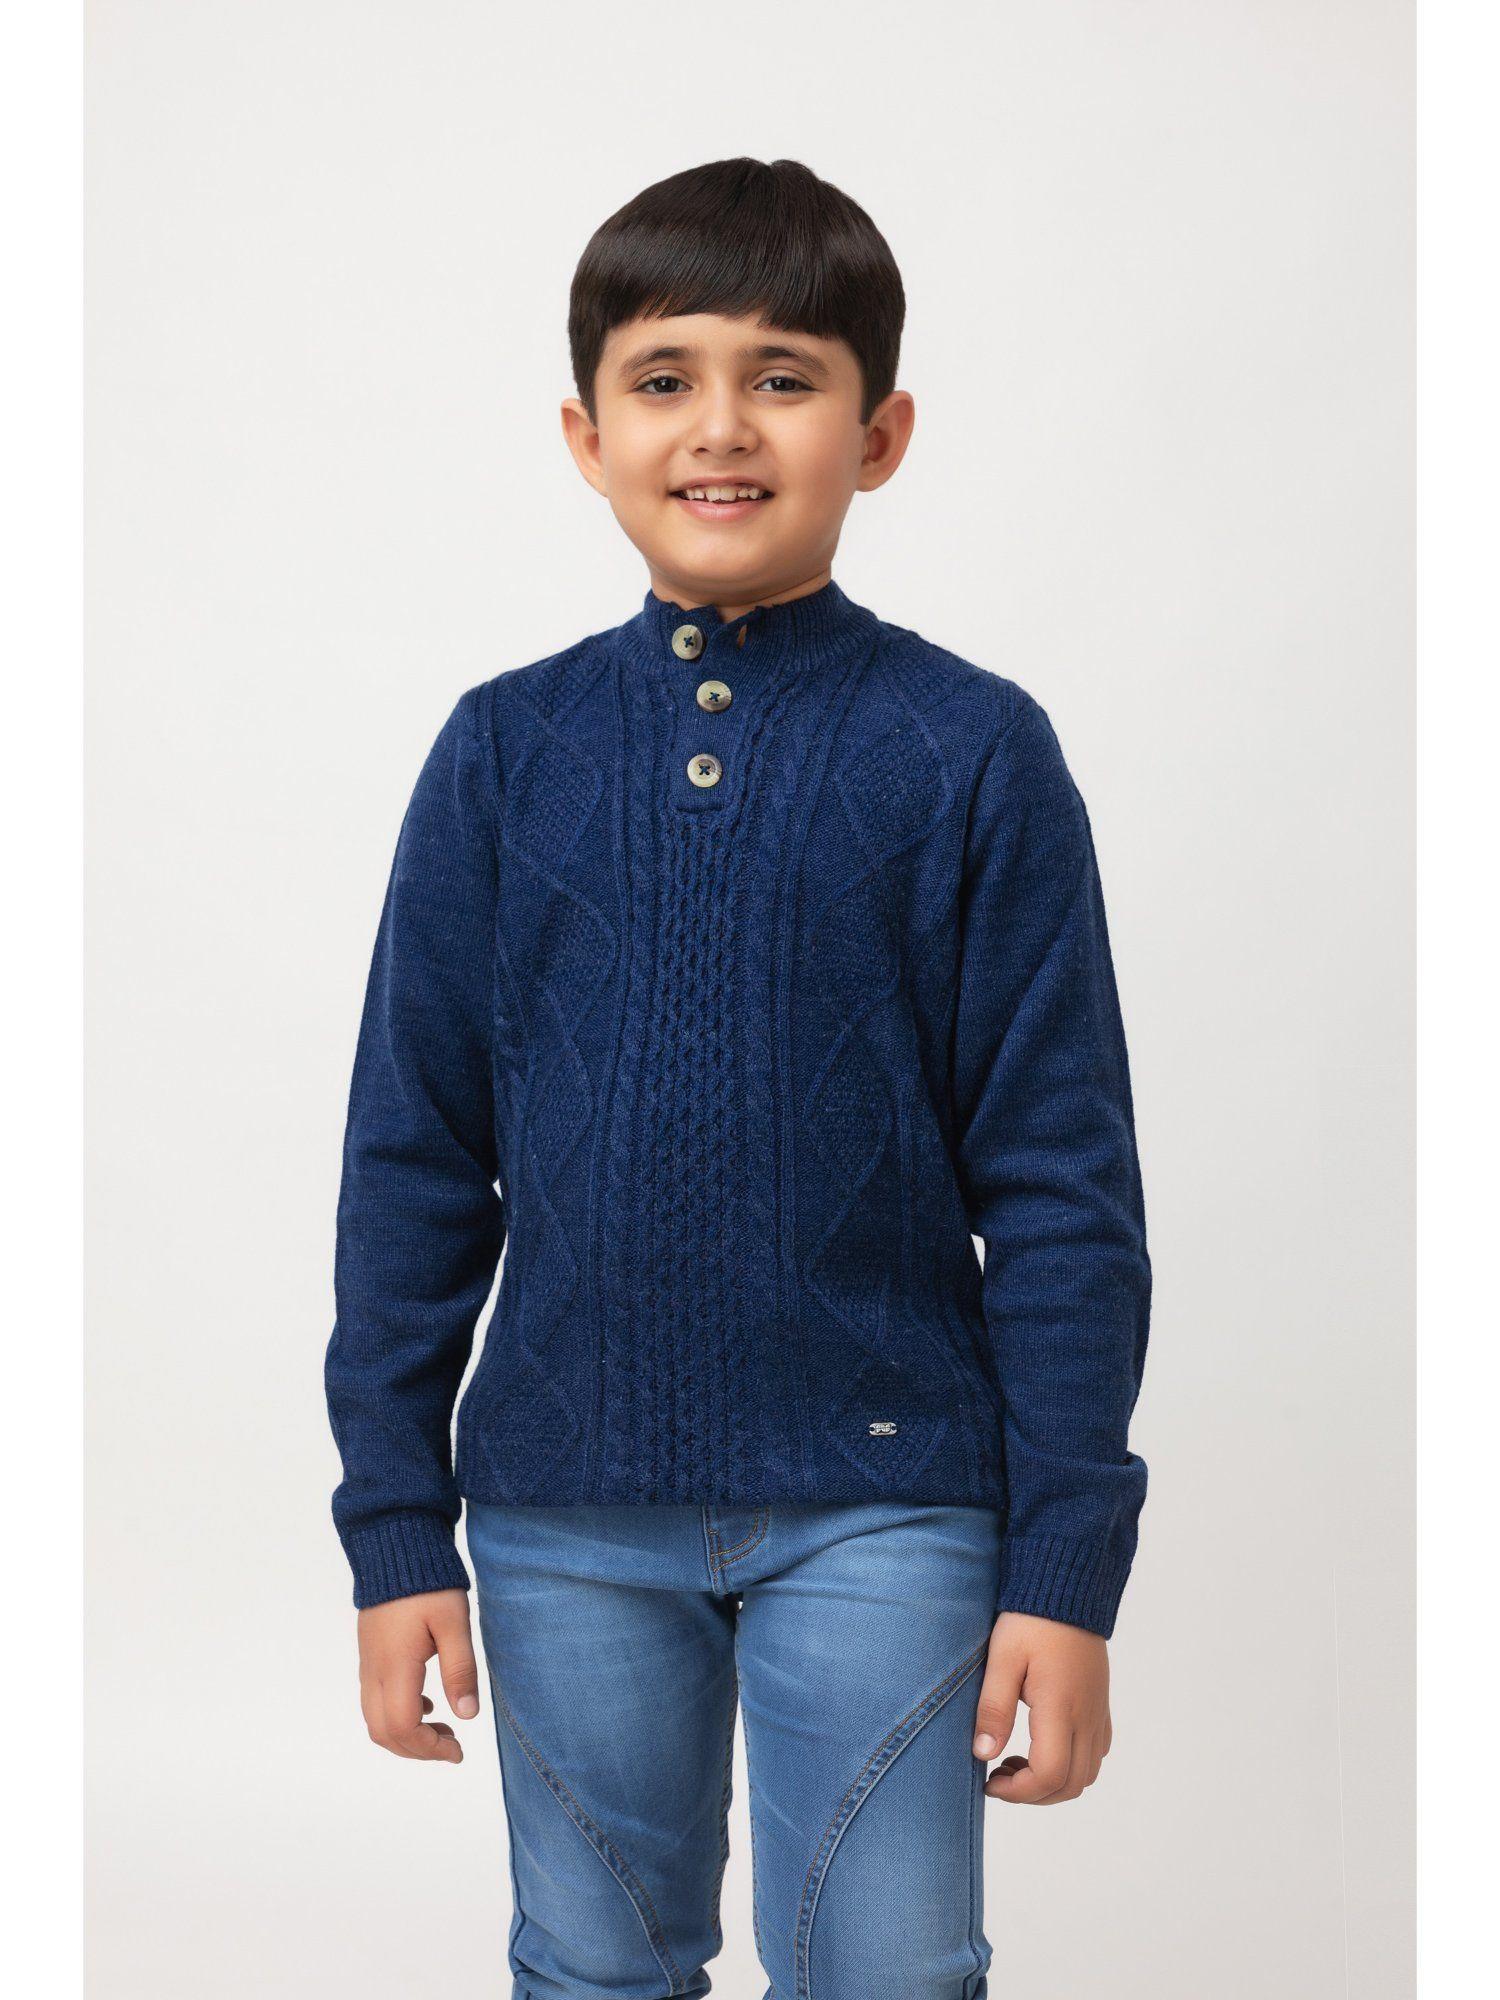 boys-navy-blue-woven-full-sleeves-high-neck-sweater